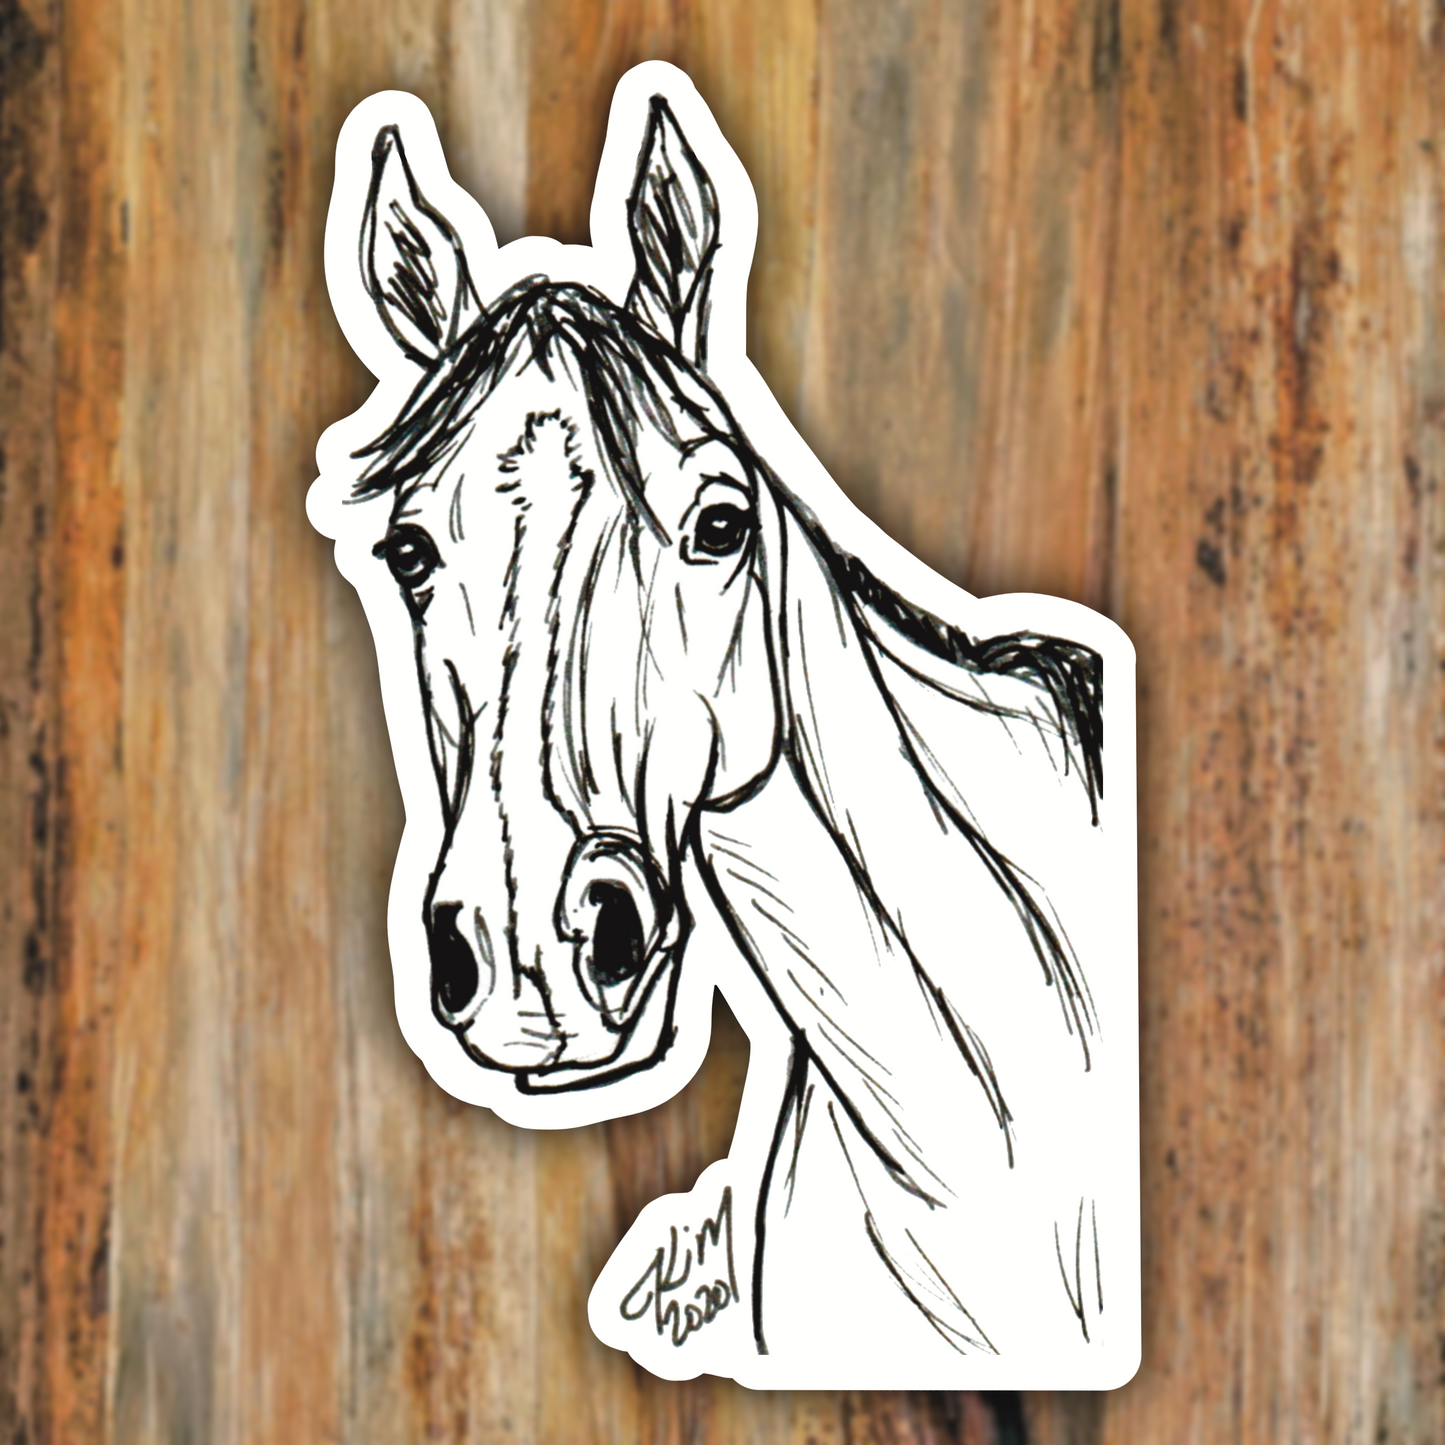 Buddy the Horse Vinyl Sticker